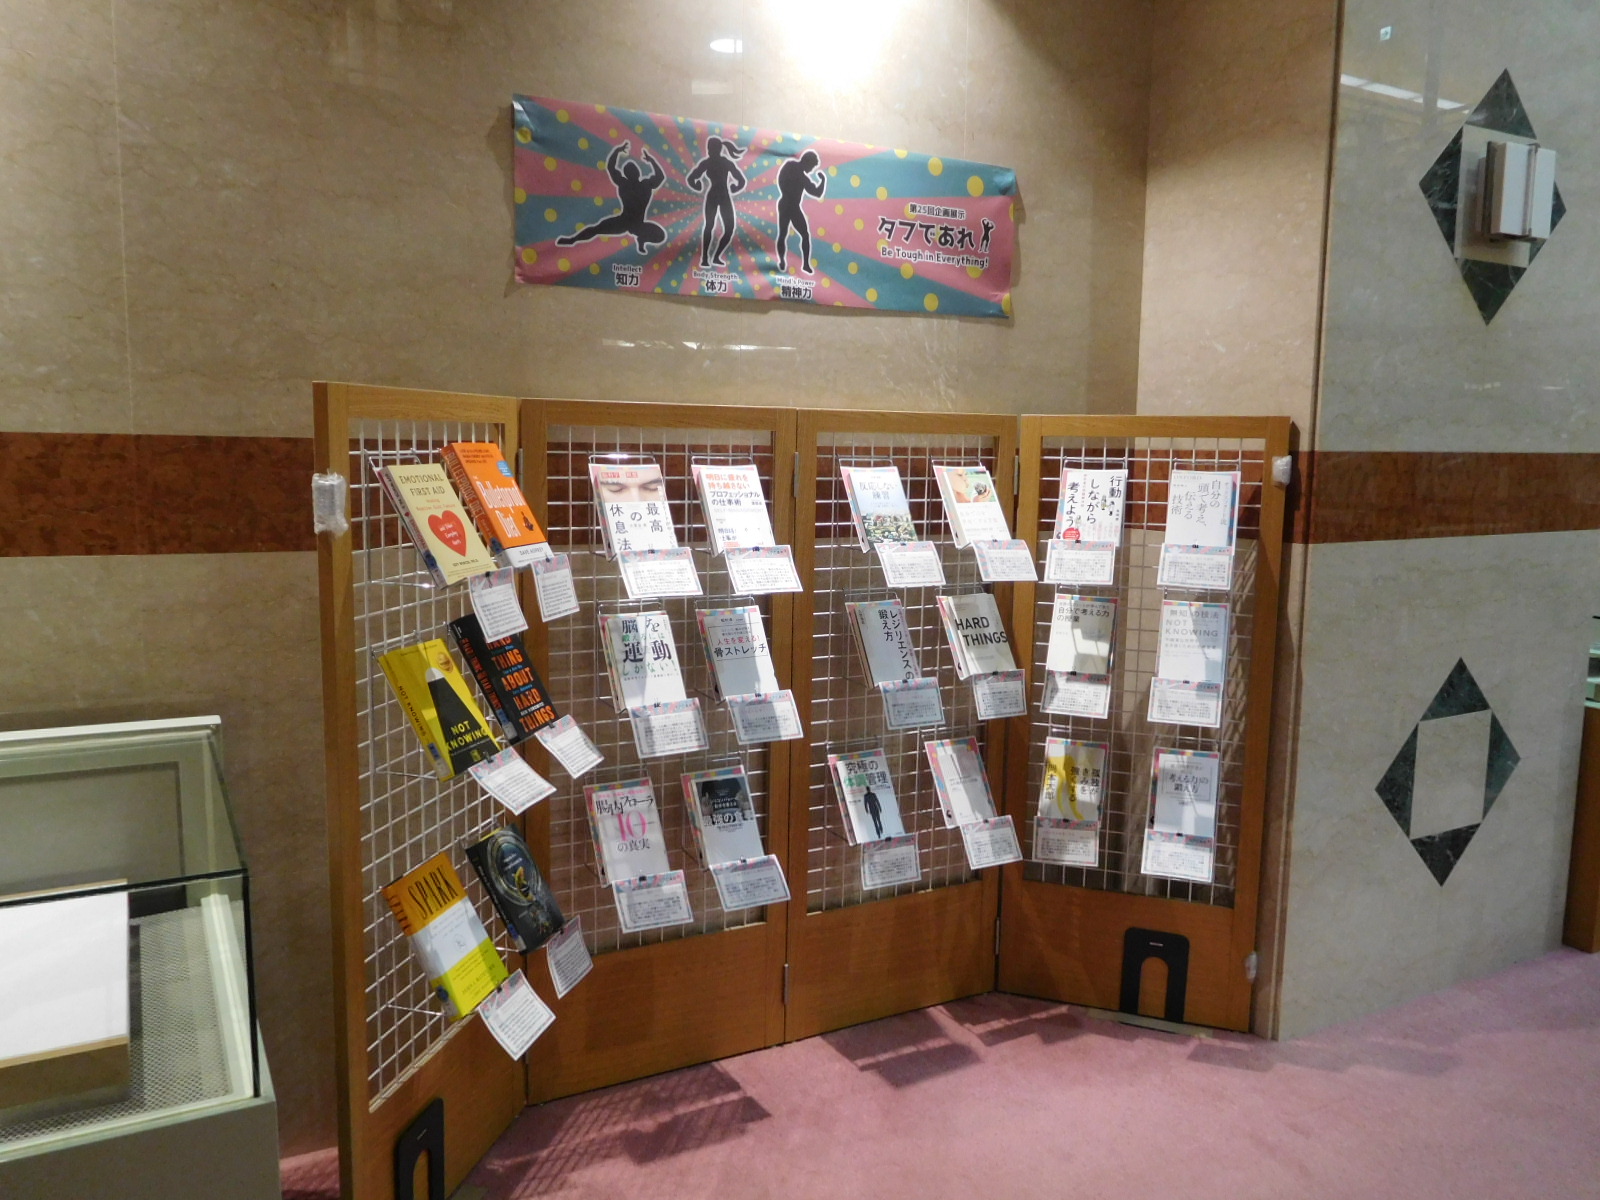 exhibition books